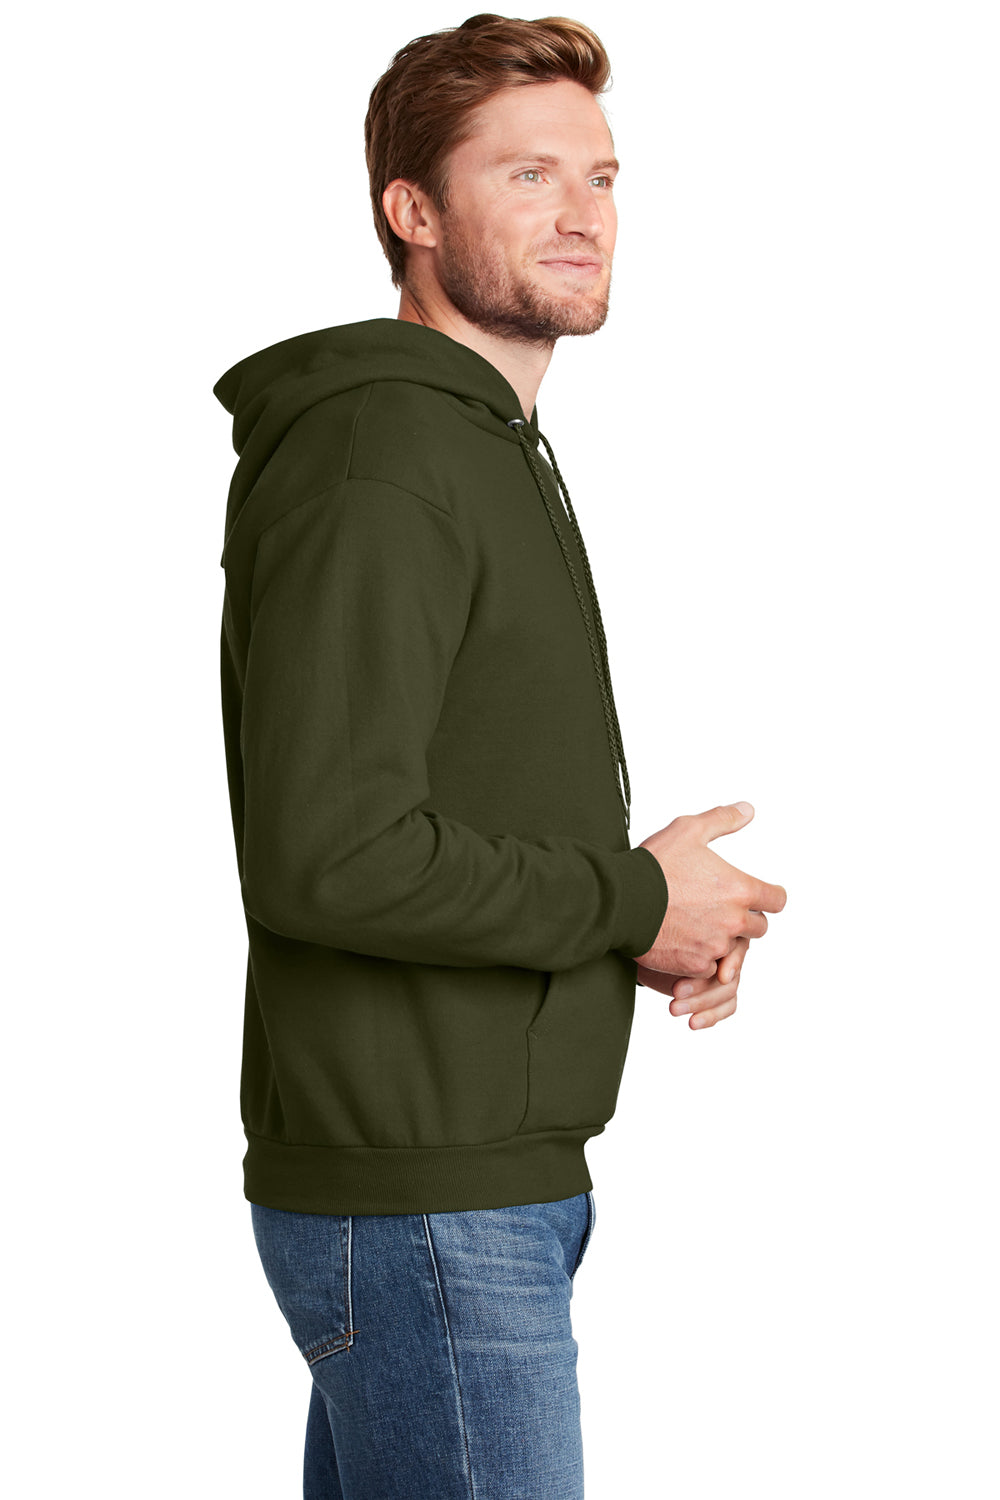 Hanes P170 Mens EcoSmart Print Pro XP Hooded Sweatshirt Hoodie Fatigue Green Side